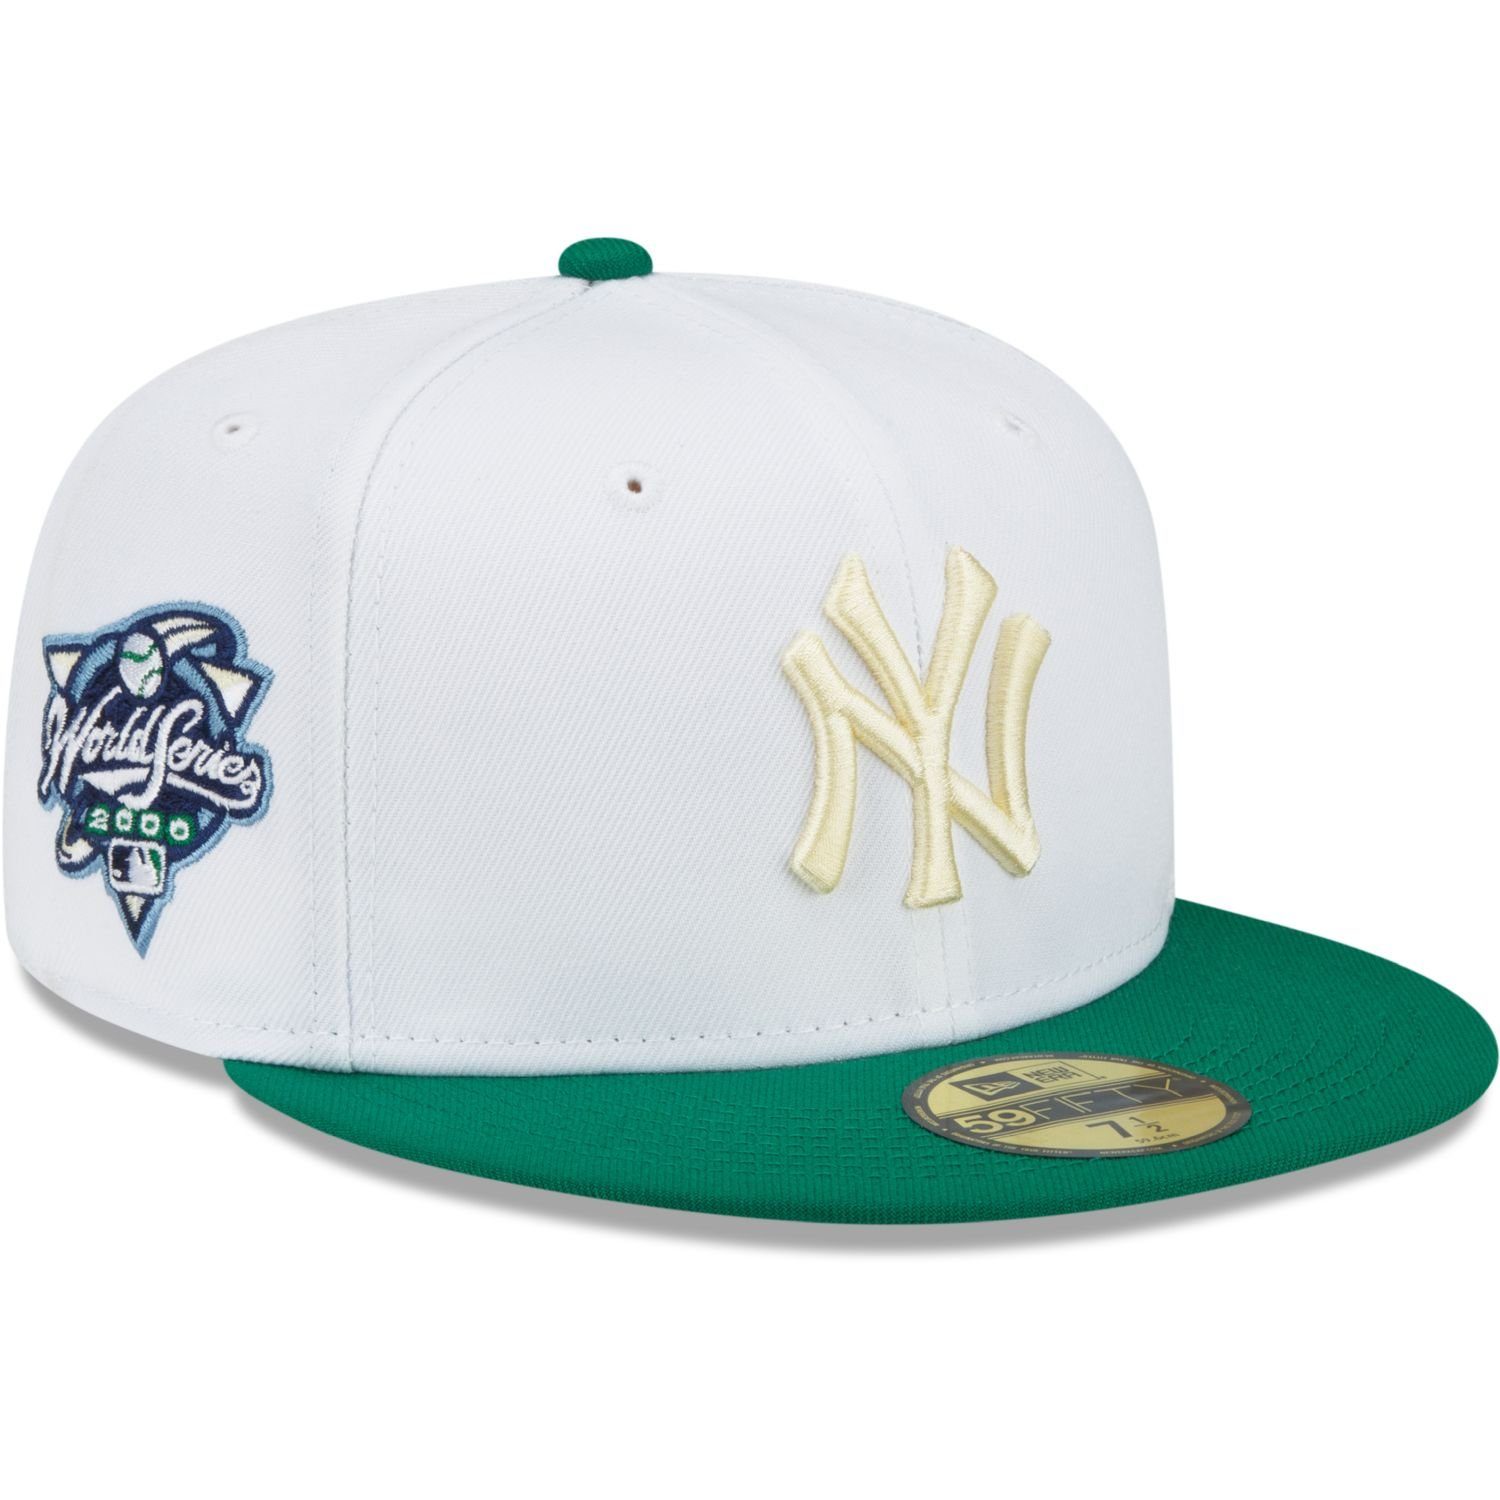 New Era Fitted Cap 59Fifty ANNIVERSARY New York Yankees